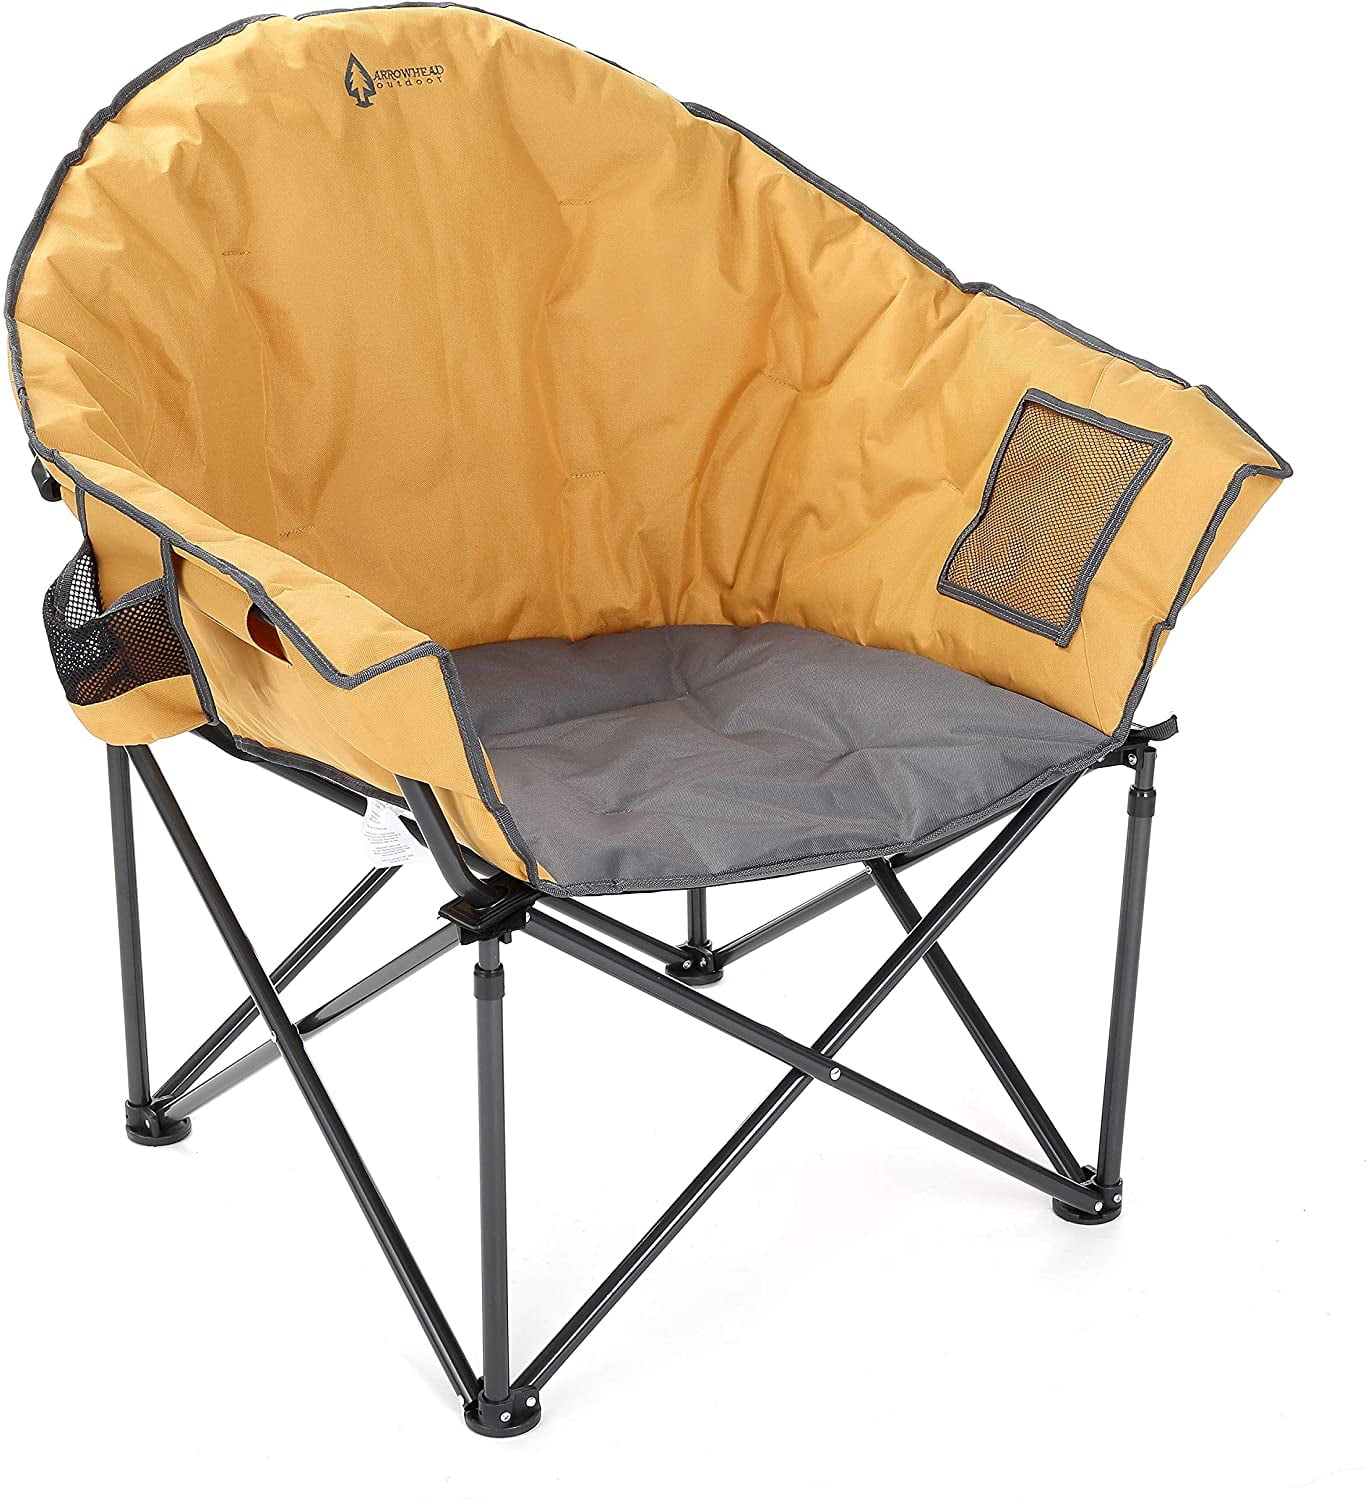 heavy duty outdoor folding chair